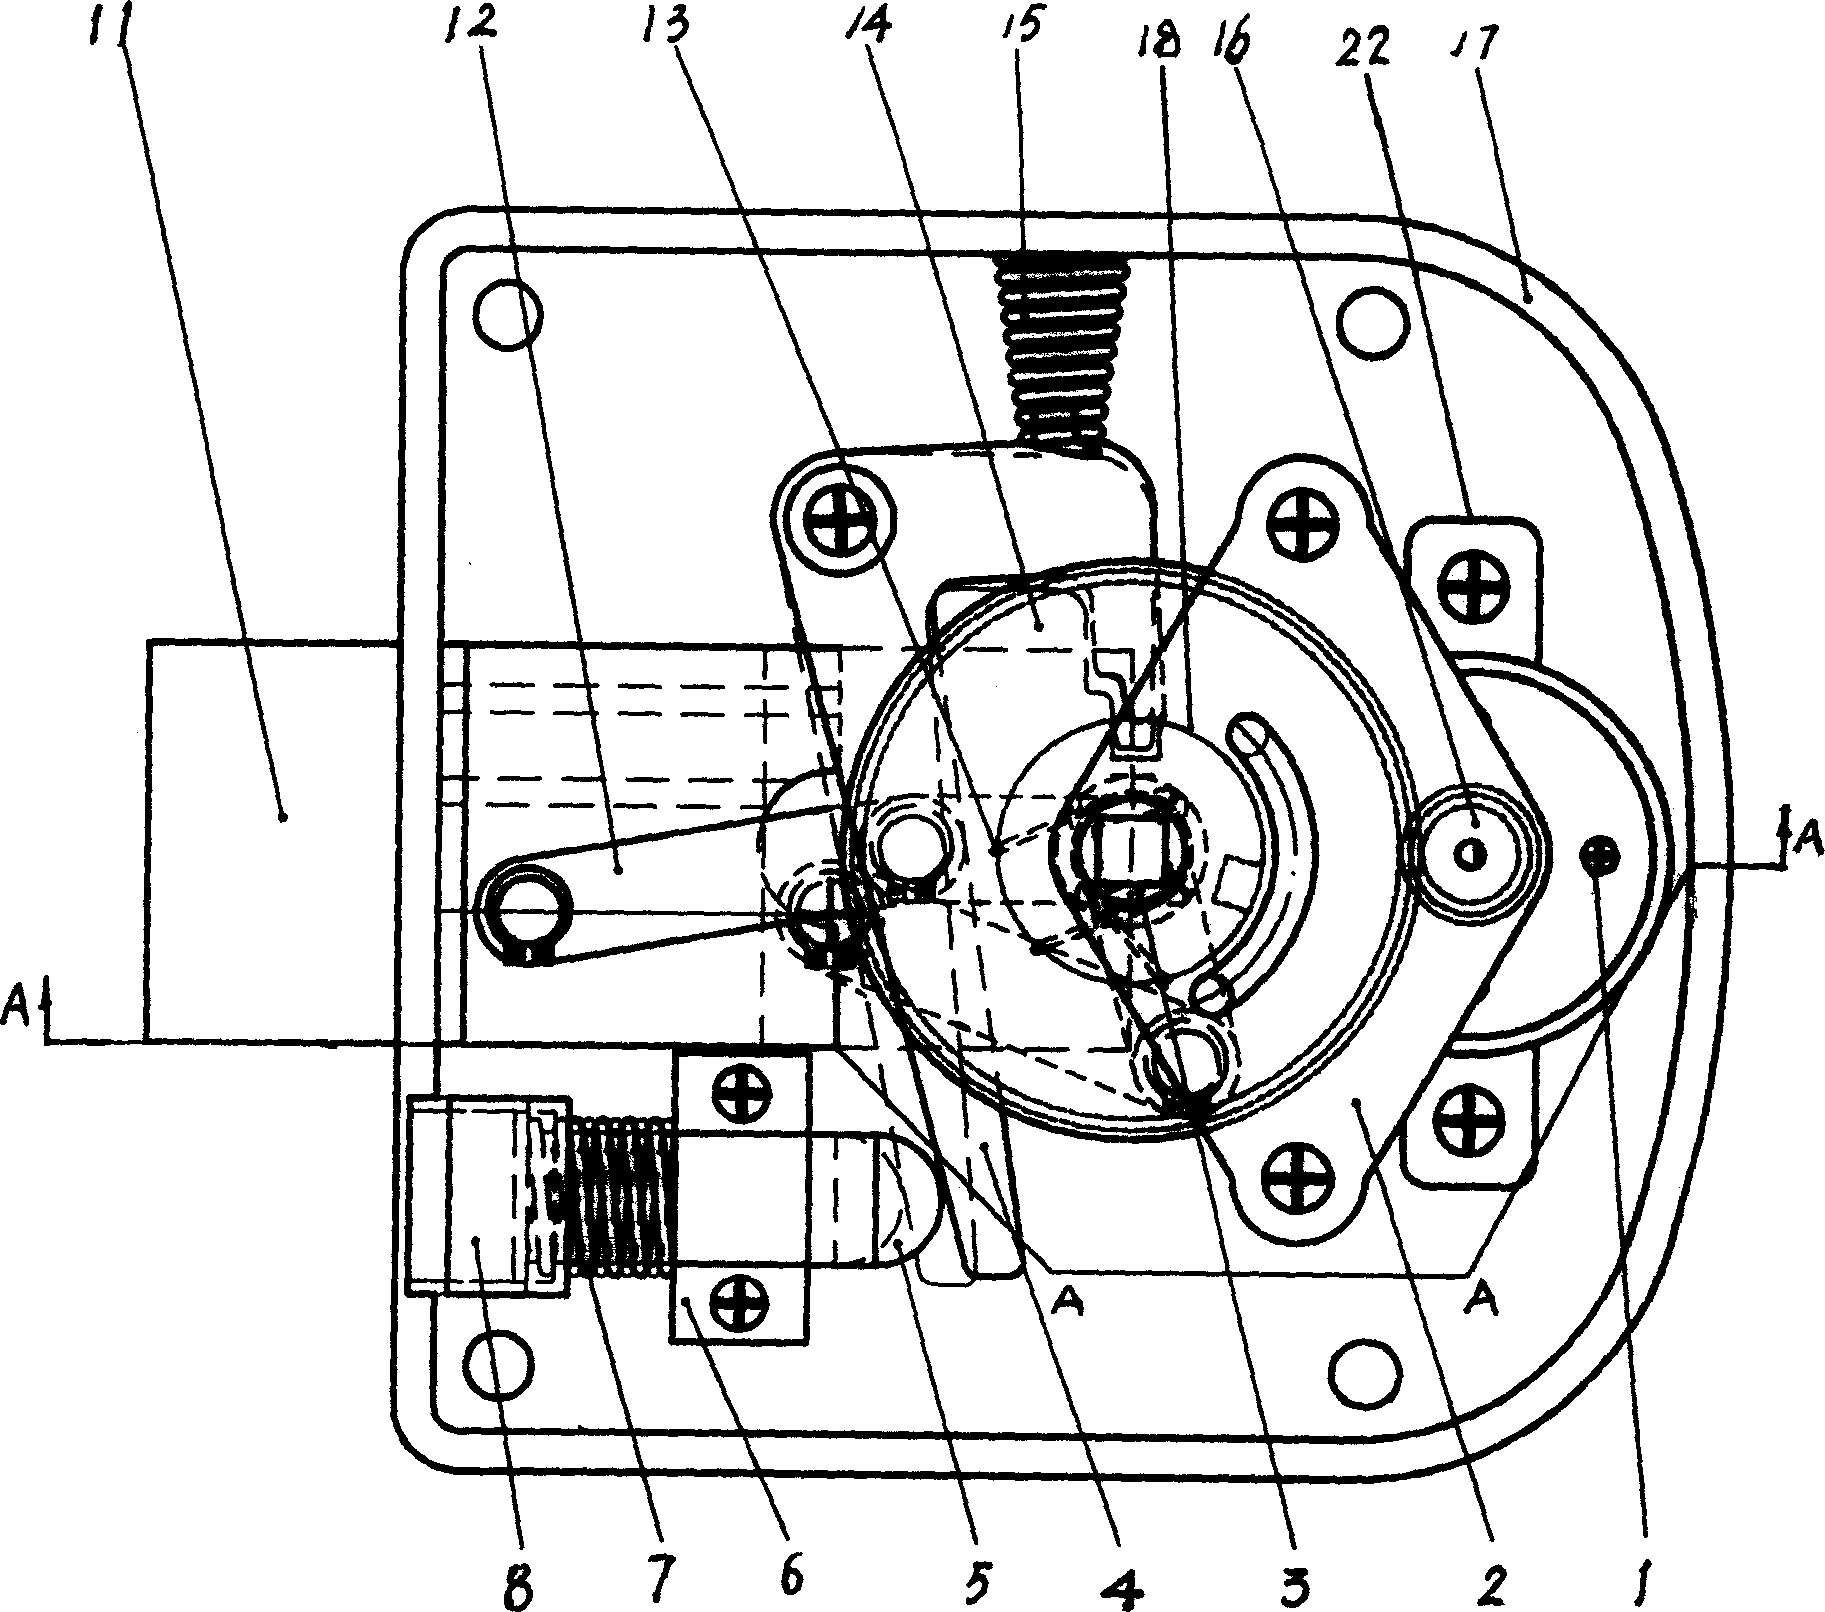 Motor lock